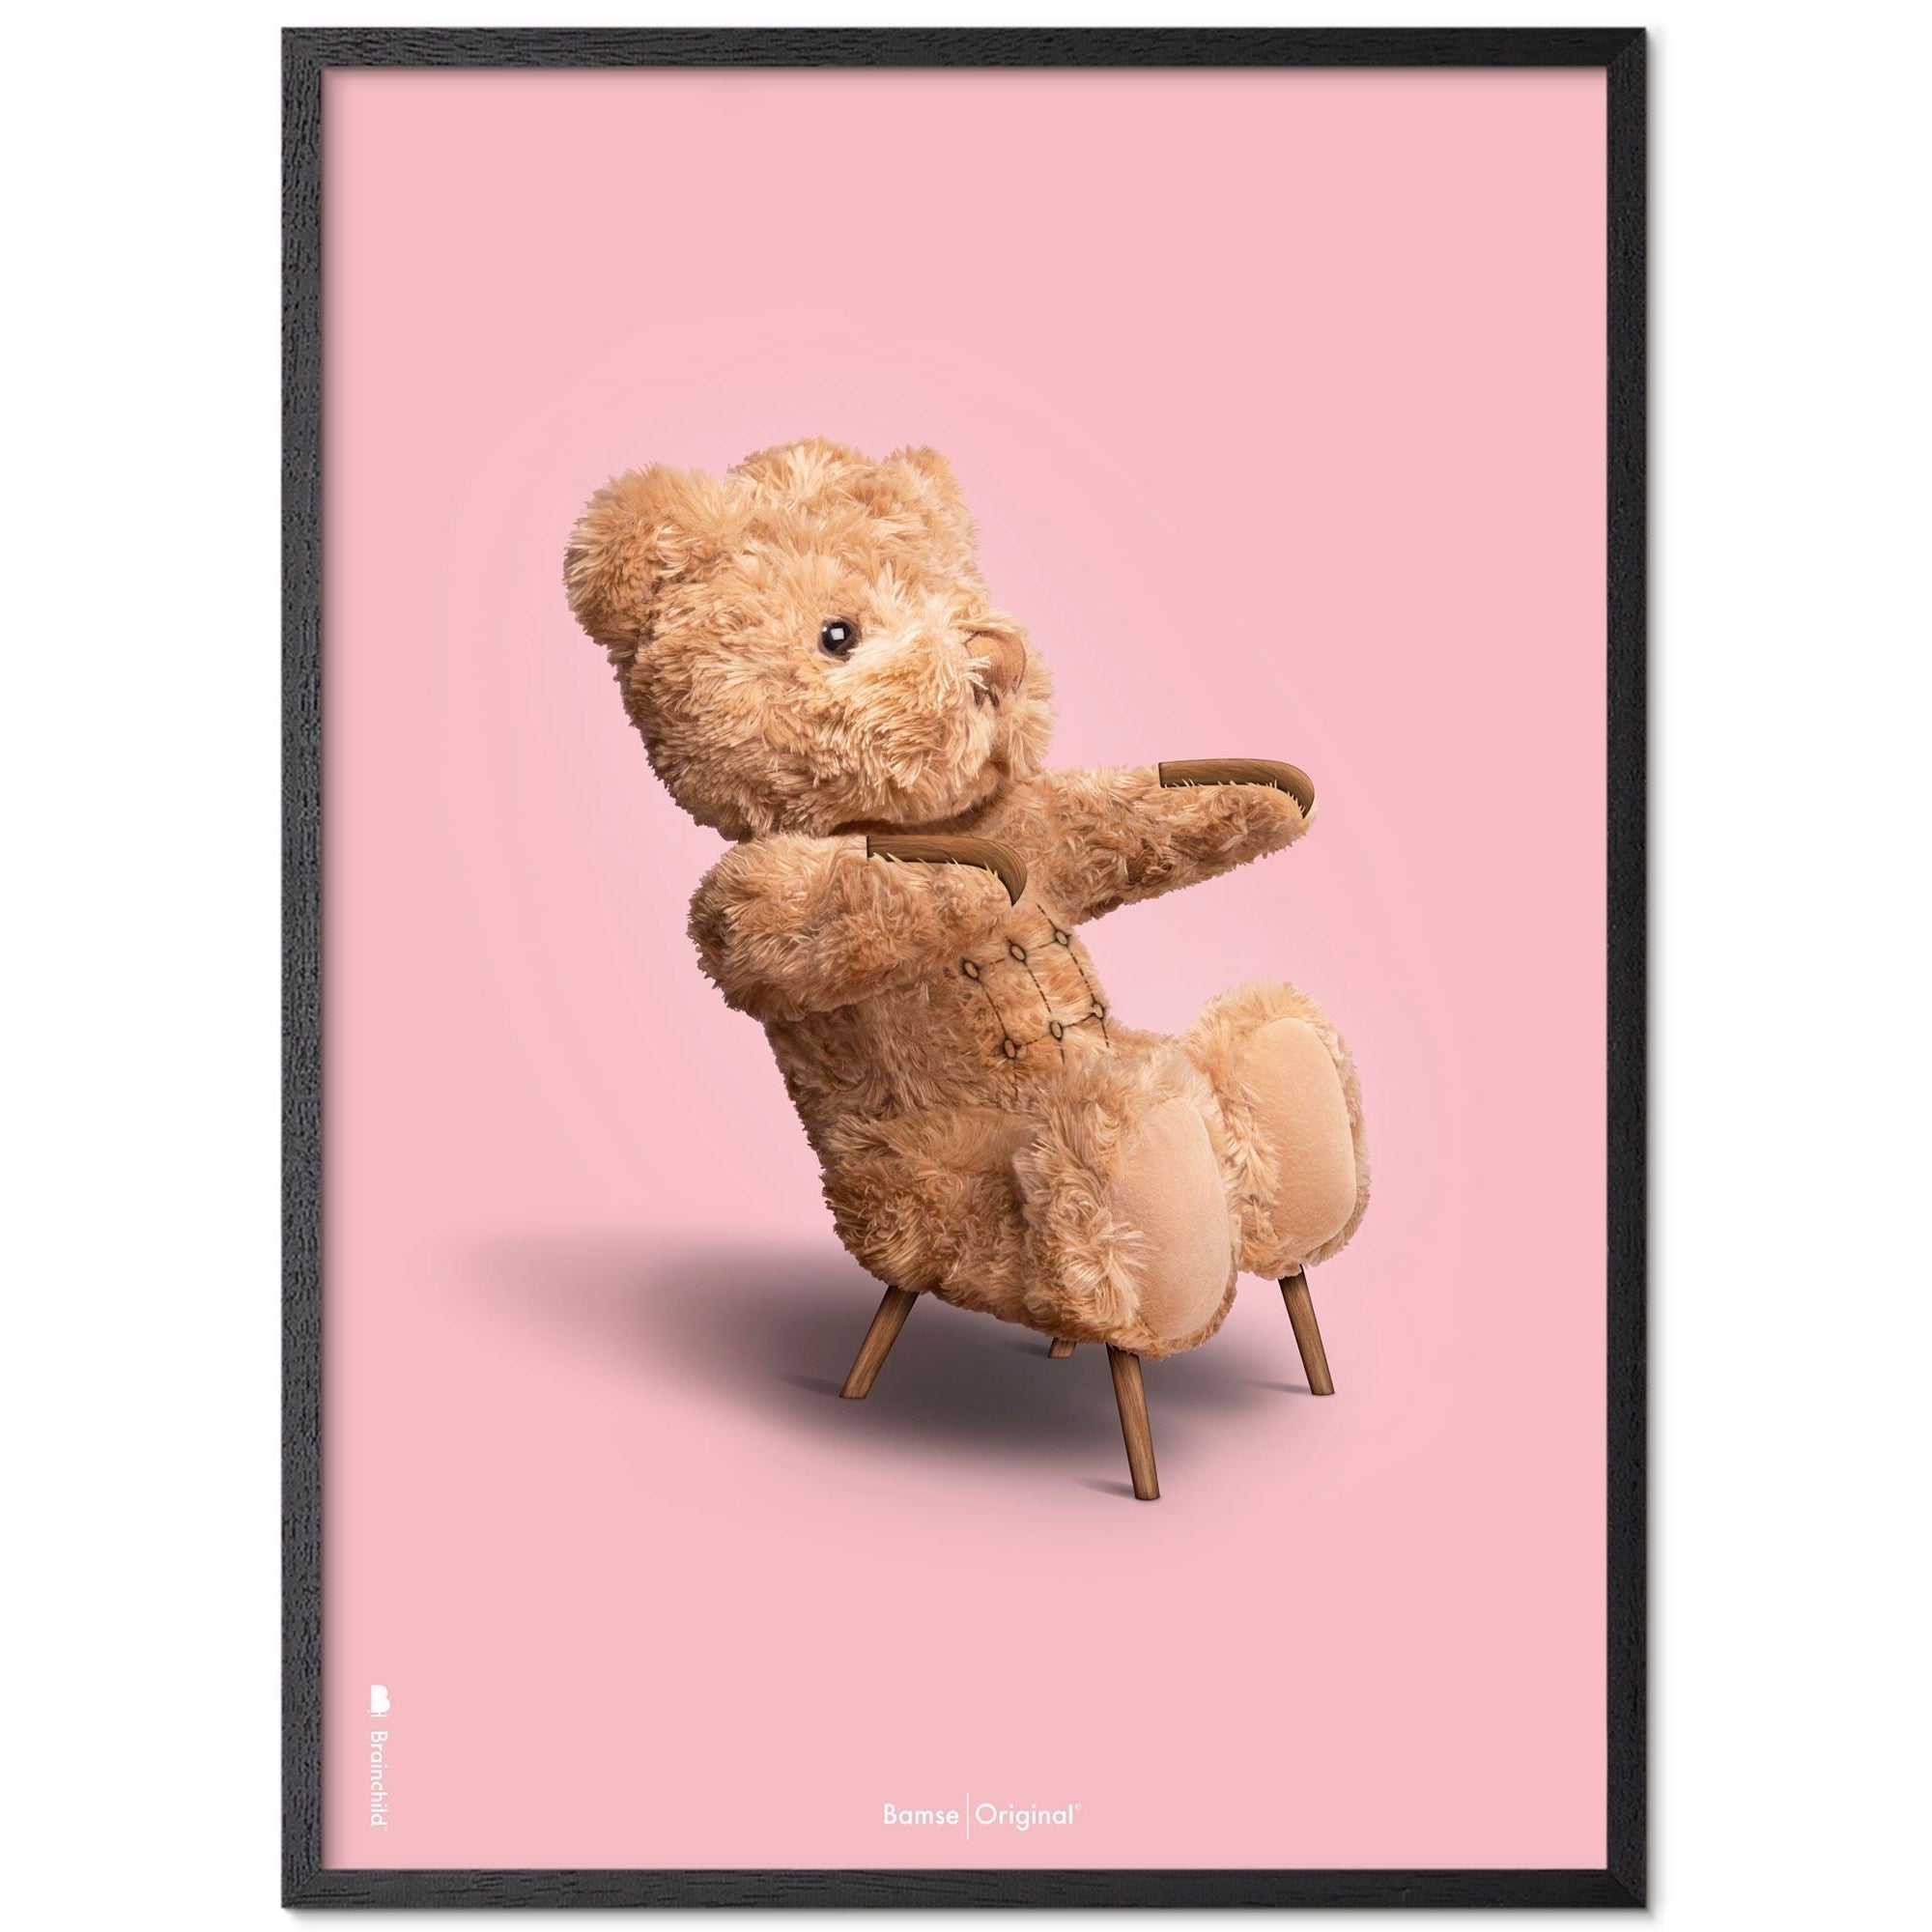 Brainchild Teddybeer klassiek poster frame gemaakt van zwart gelakt hout 30x40 cm, roze achtergrond